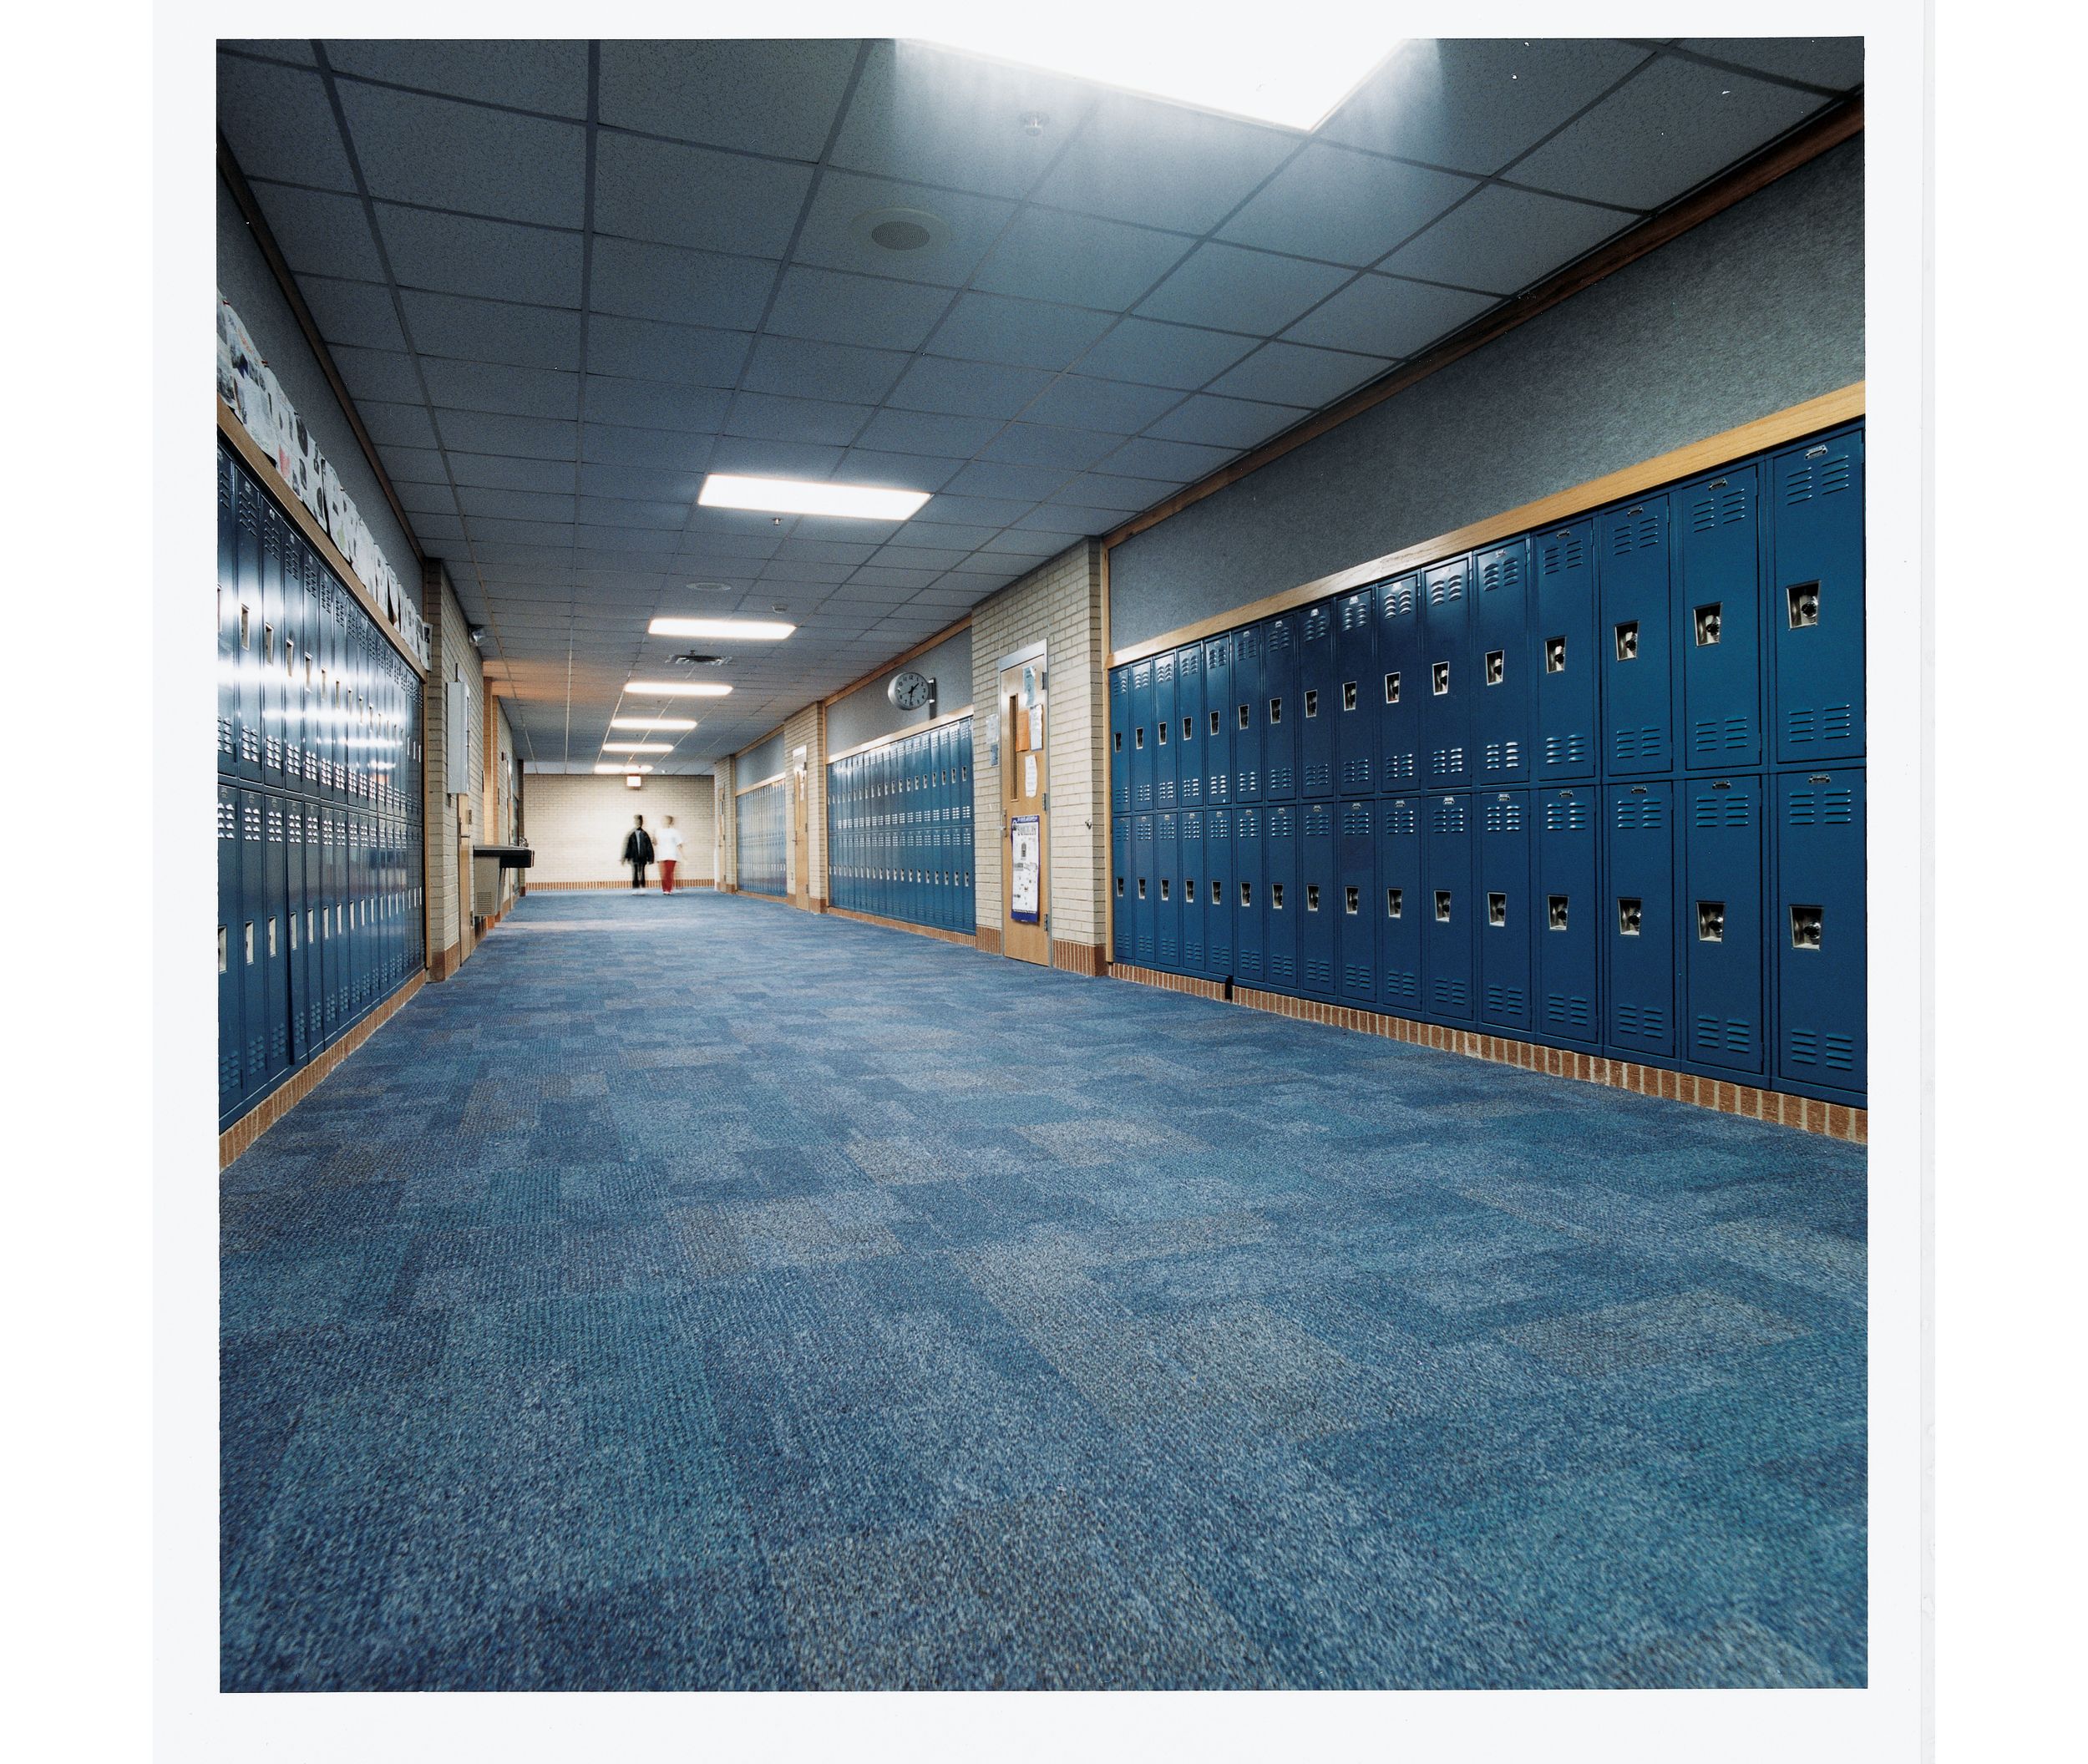 Interface Cubic carpet tile in school hallway with lockers lining walls imagen número 4